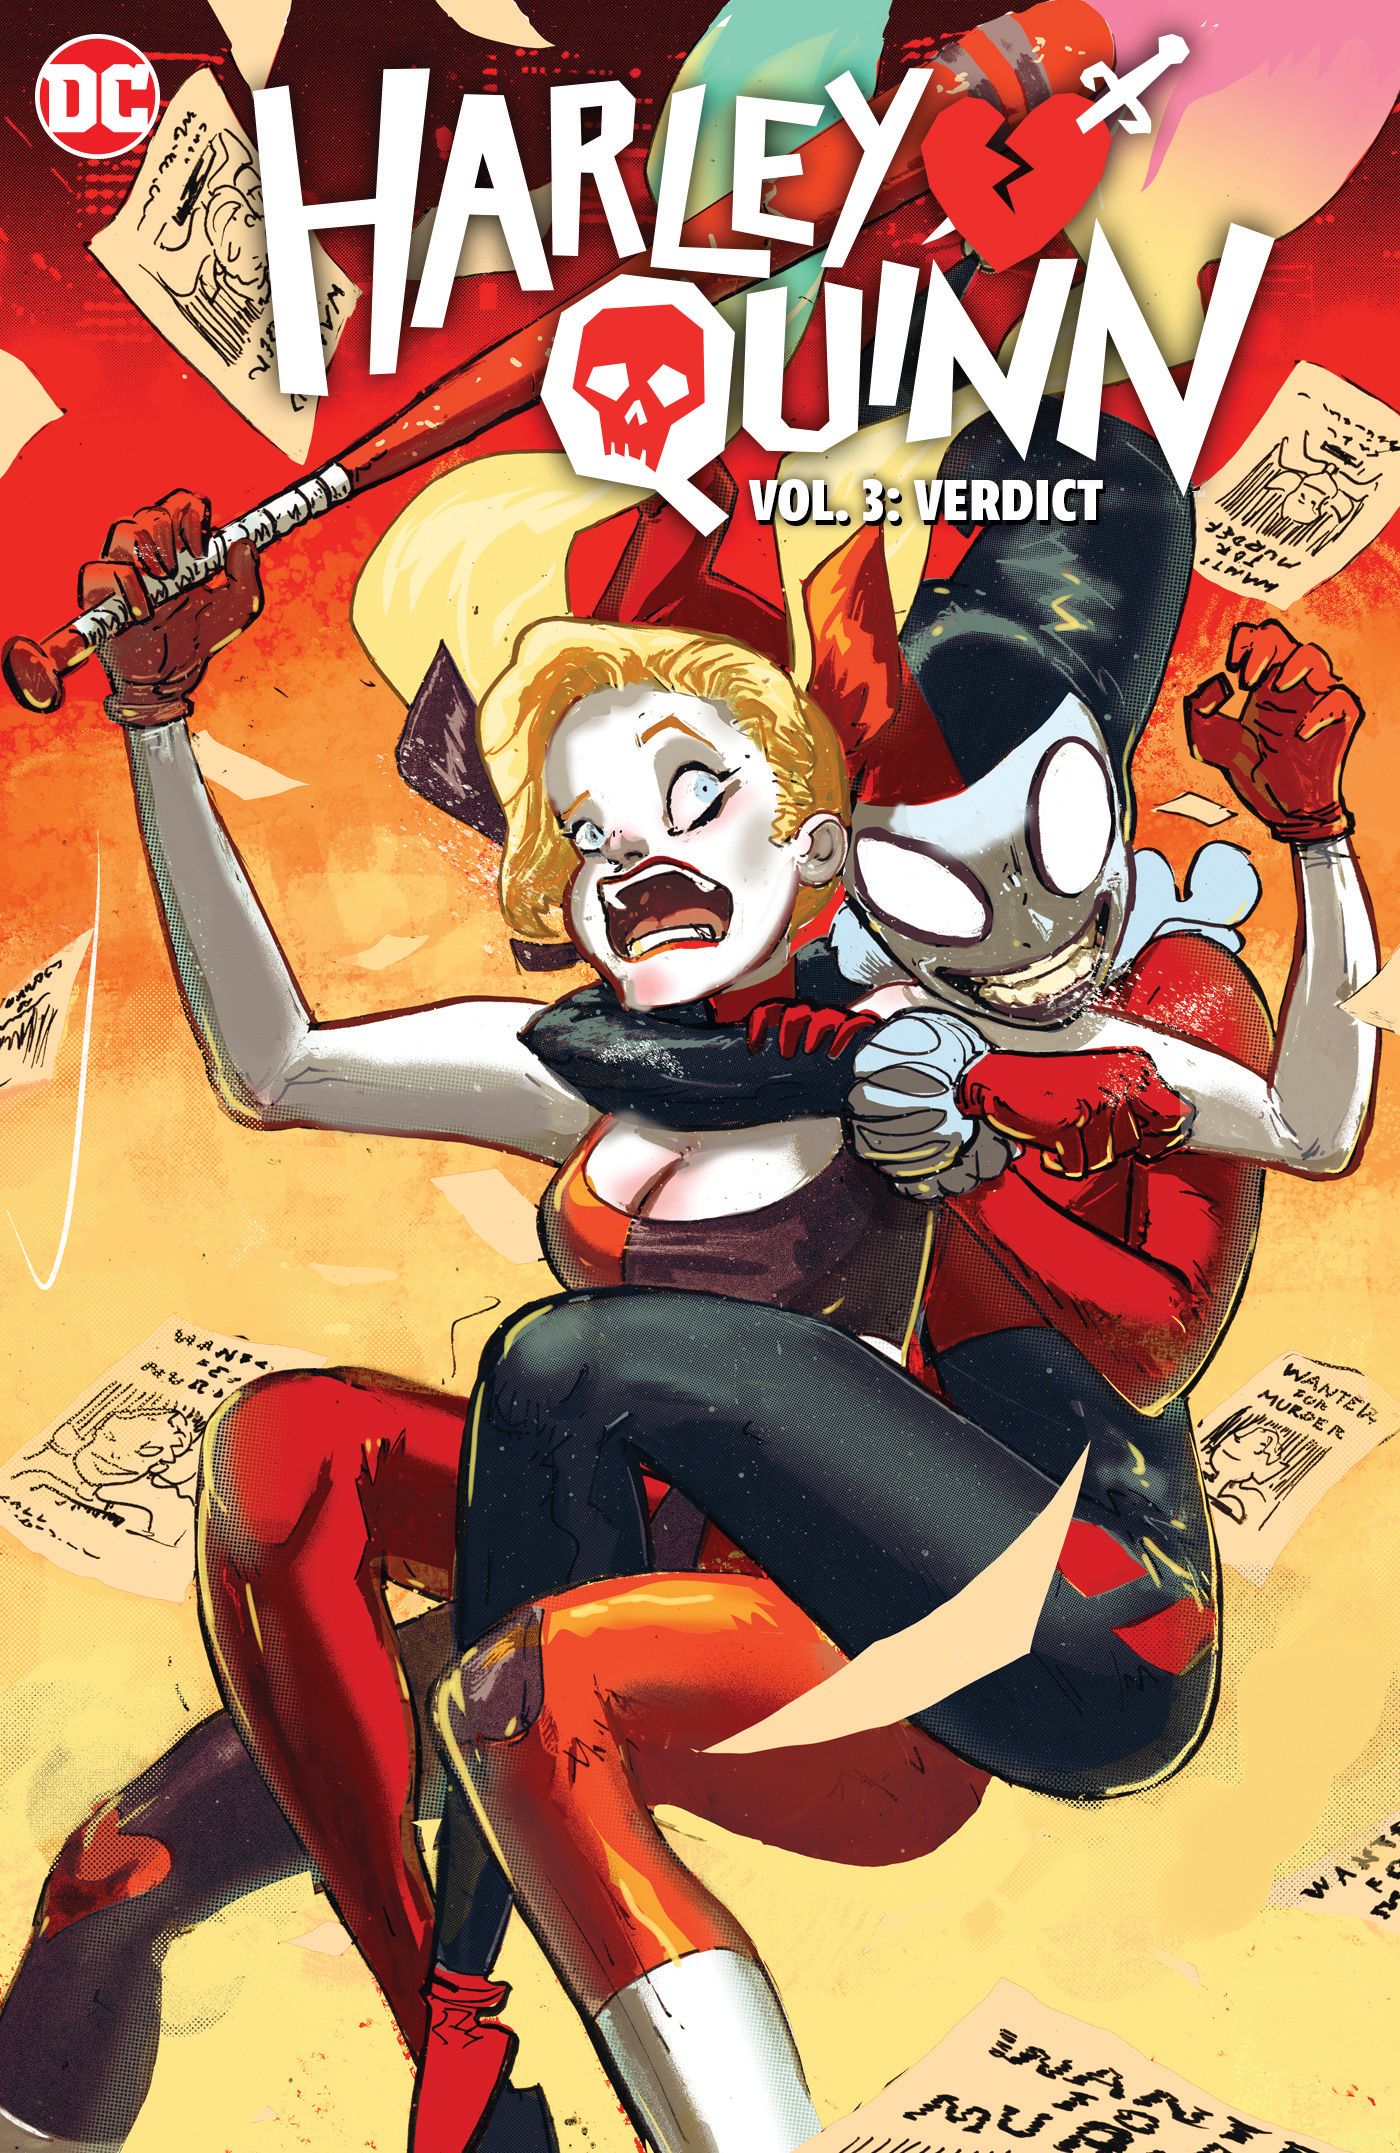 Harley Quinn Vol 3 Verdict